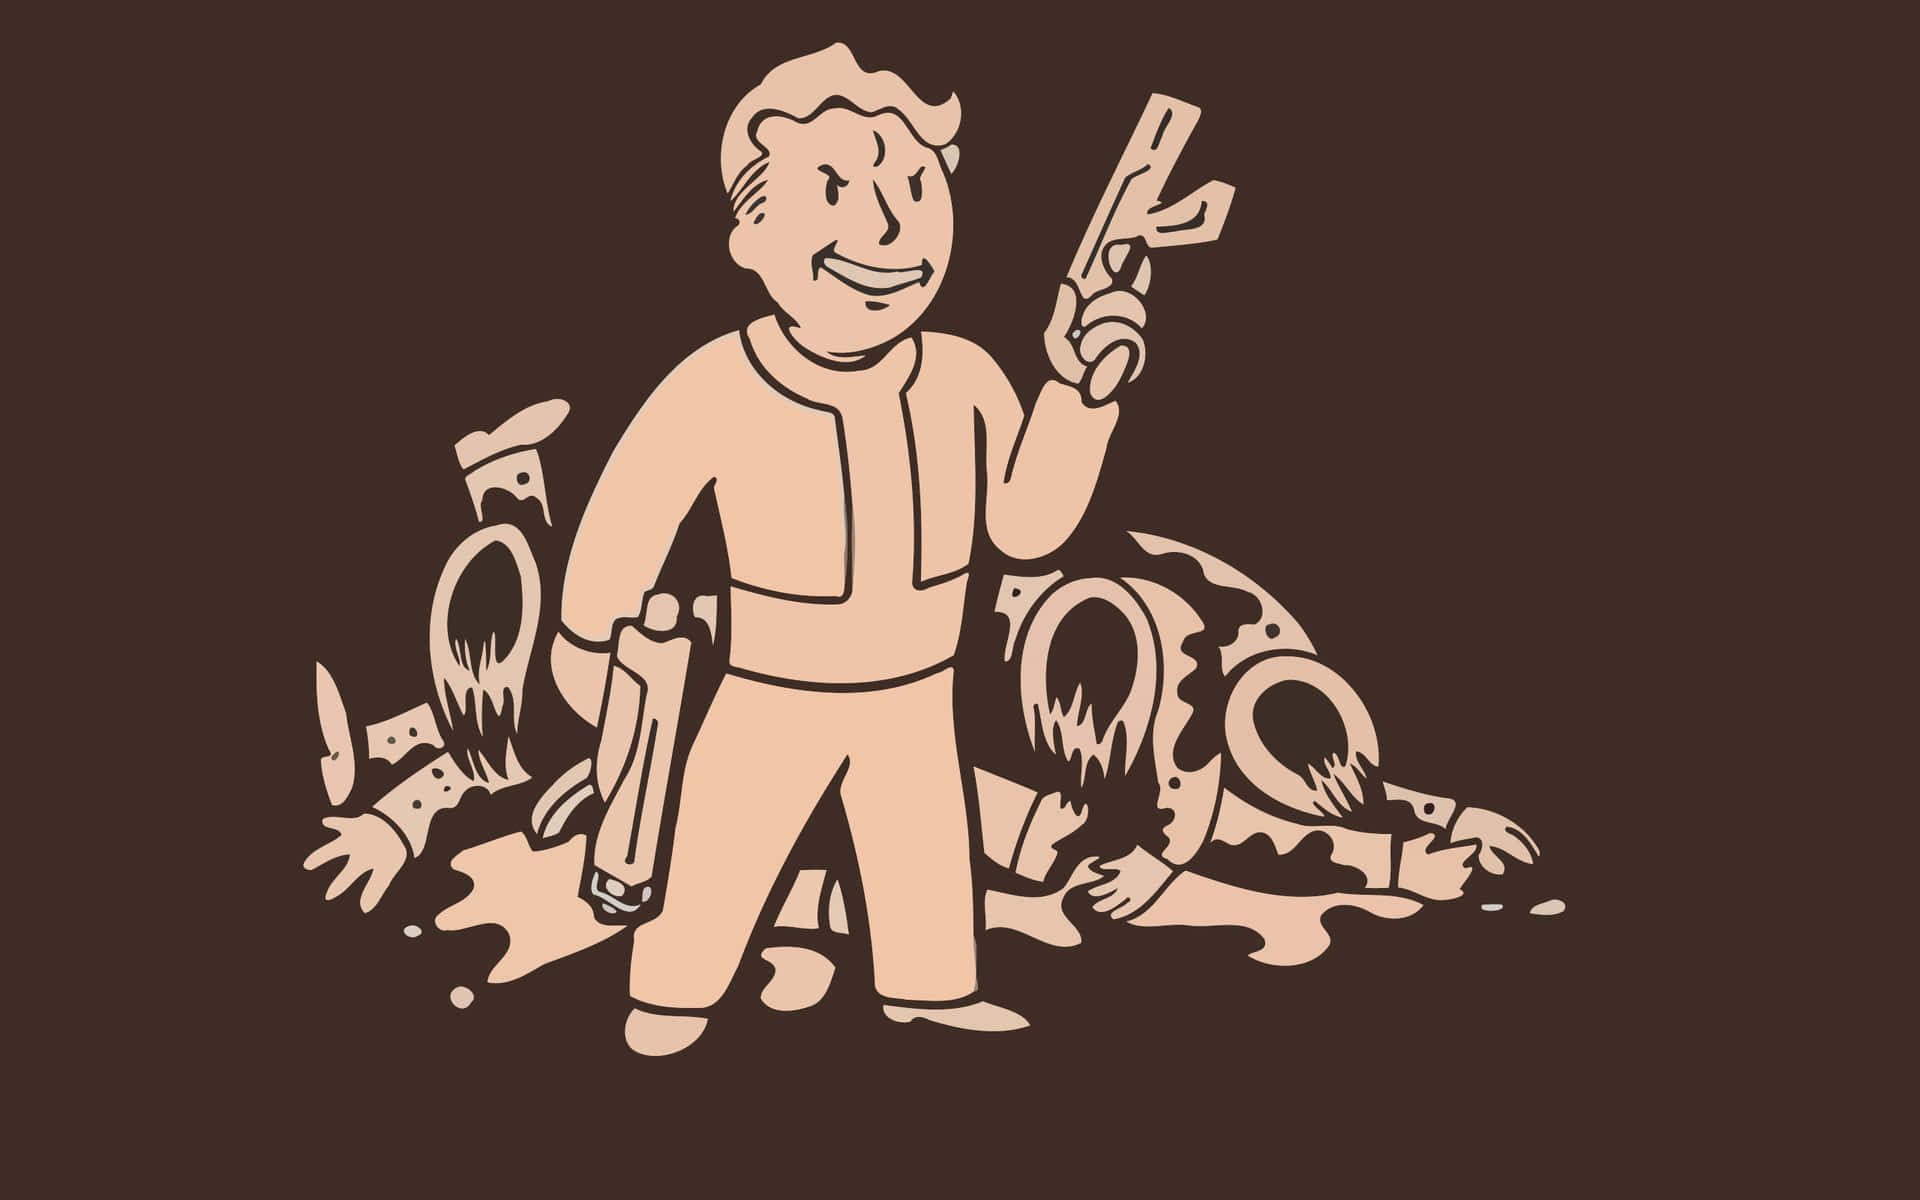 Vault Boy, the official mascot of Fallout Wallpaper